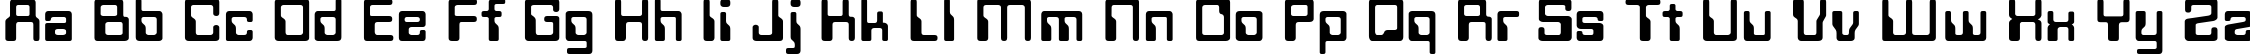 Пример написания английского алфавита шрифтом Techno Normal